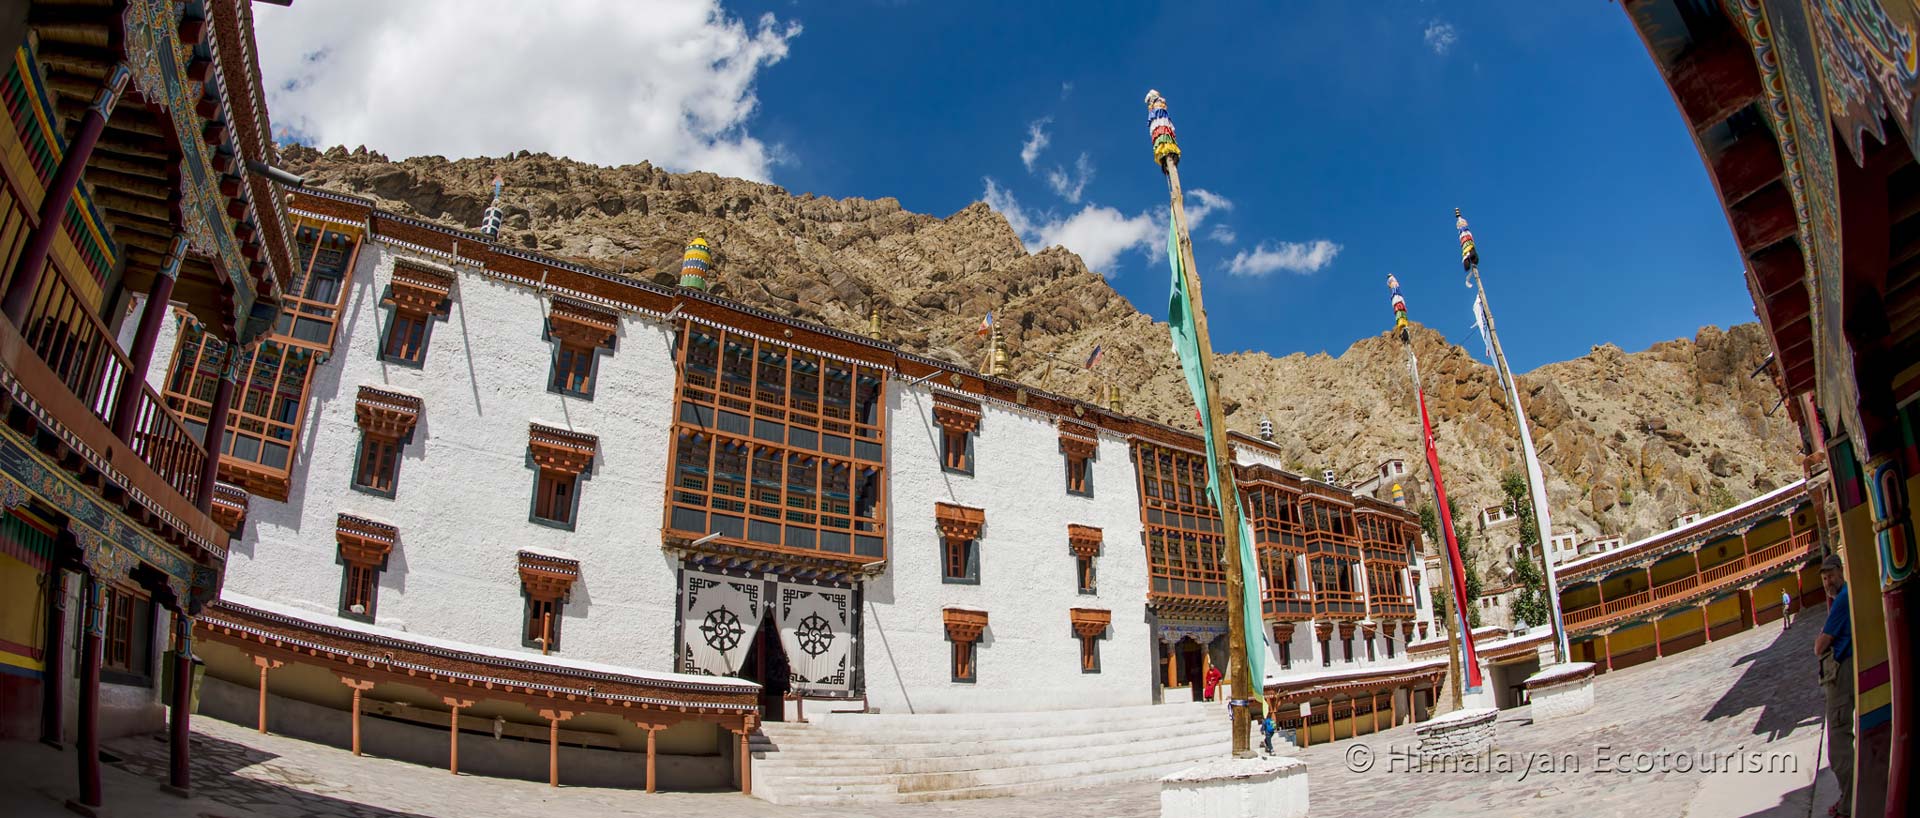 Hemis monastery, Ladakh